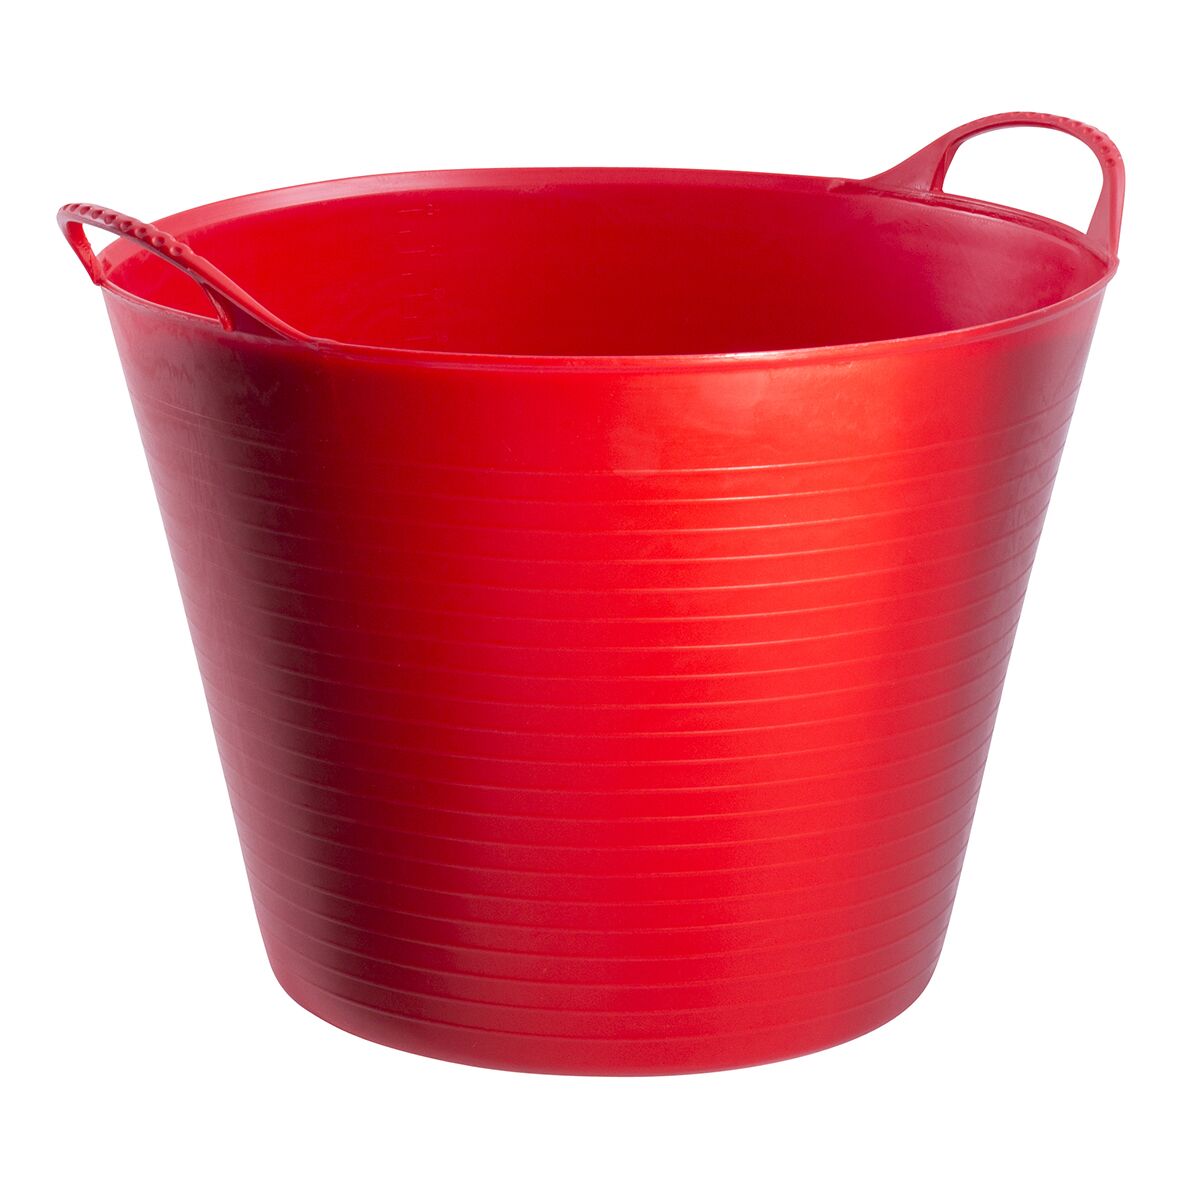 A red plastic tub trug